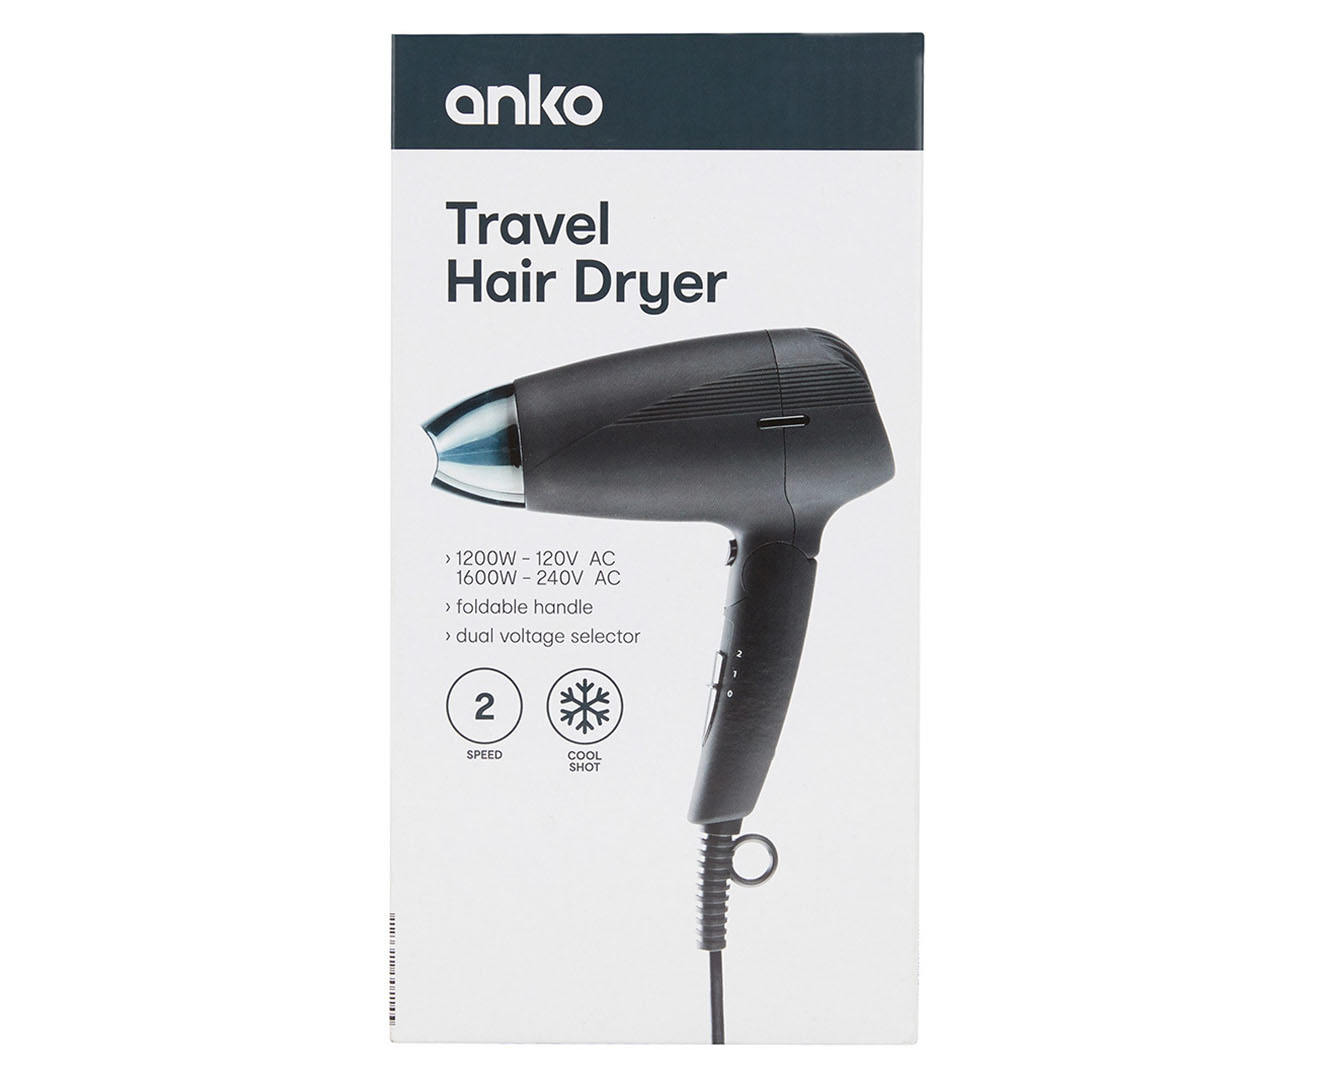 Anko by Kmart Travel Hair Dryer 